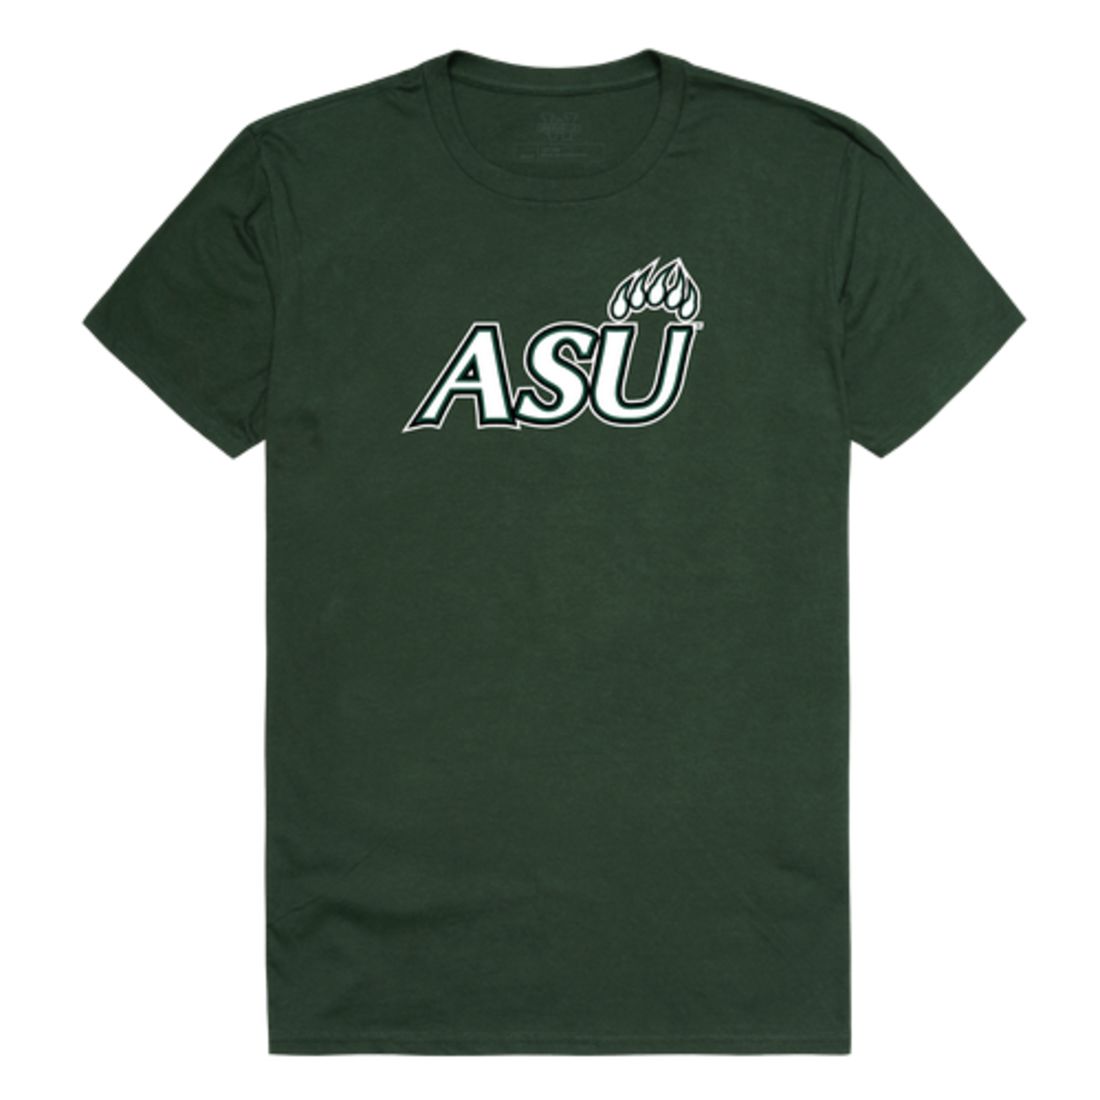 Adams State University Grizzlies Institutional T-Shirt Tee